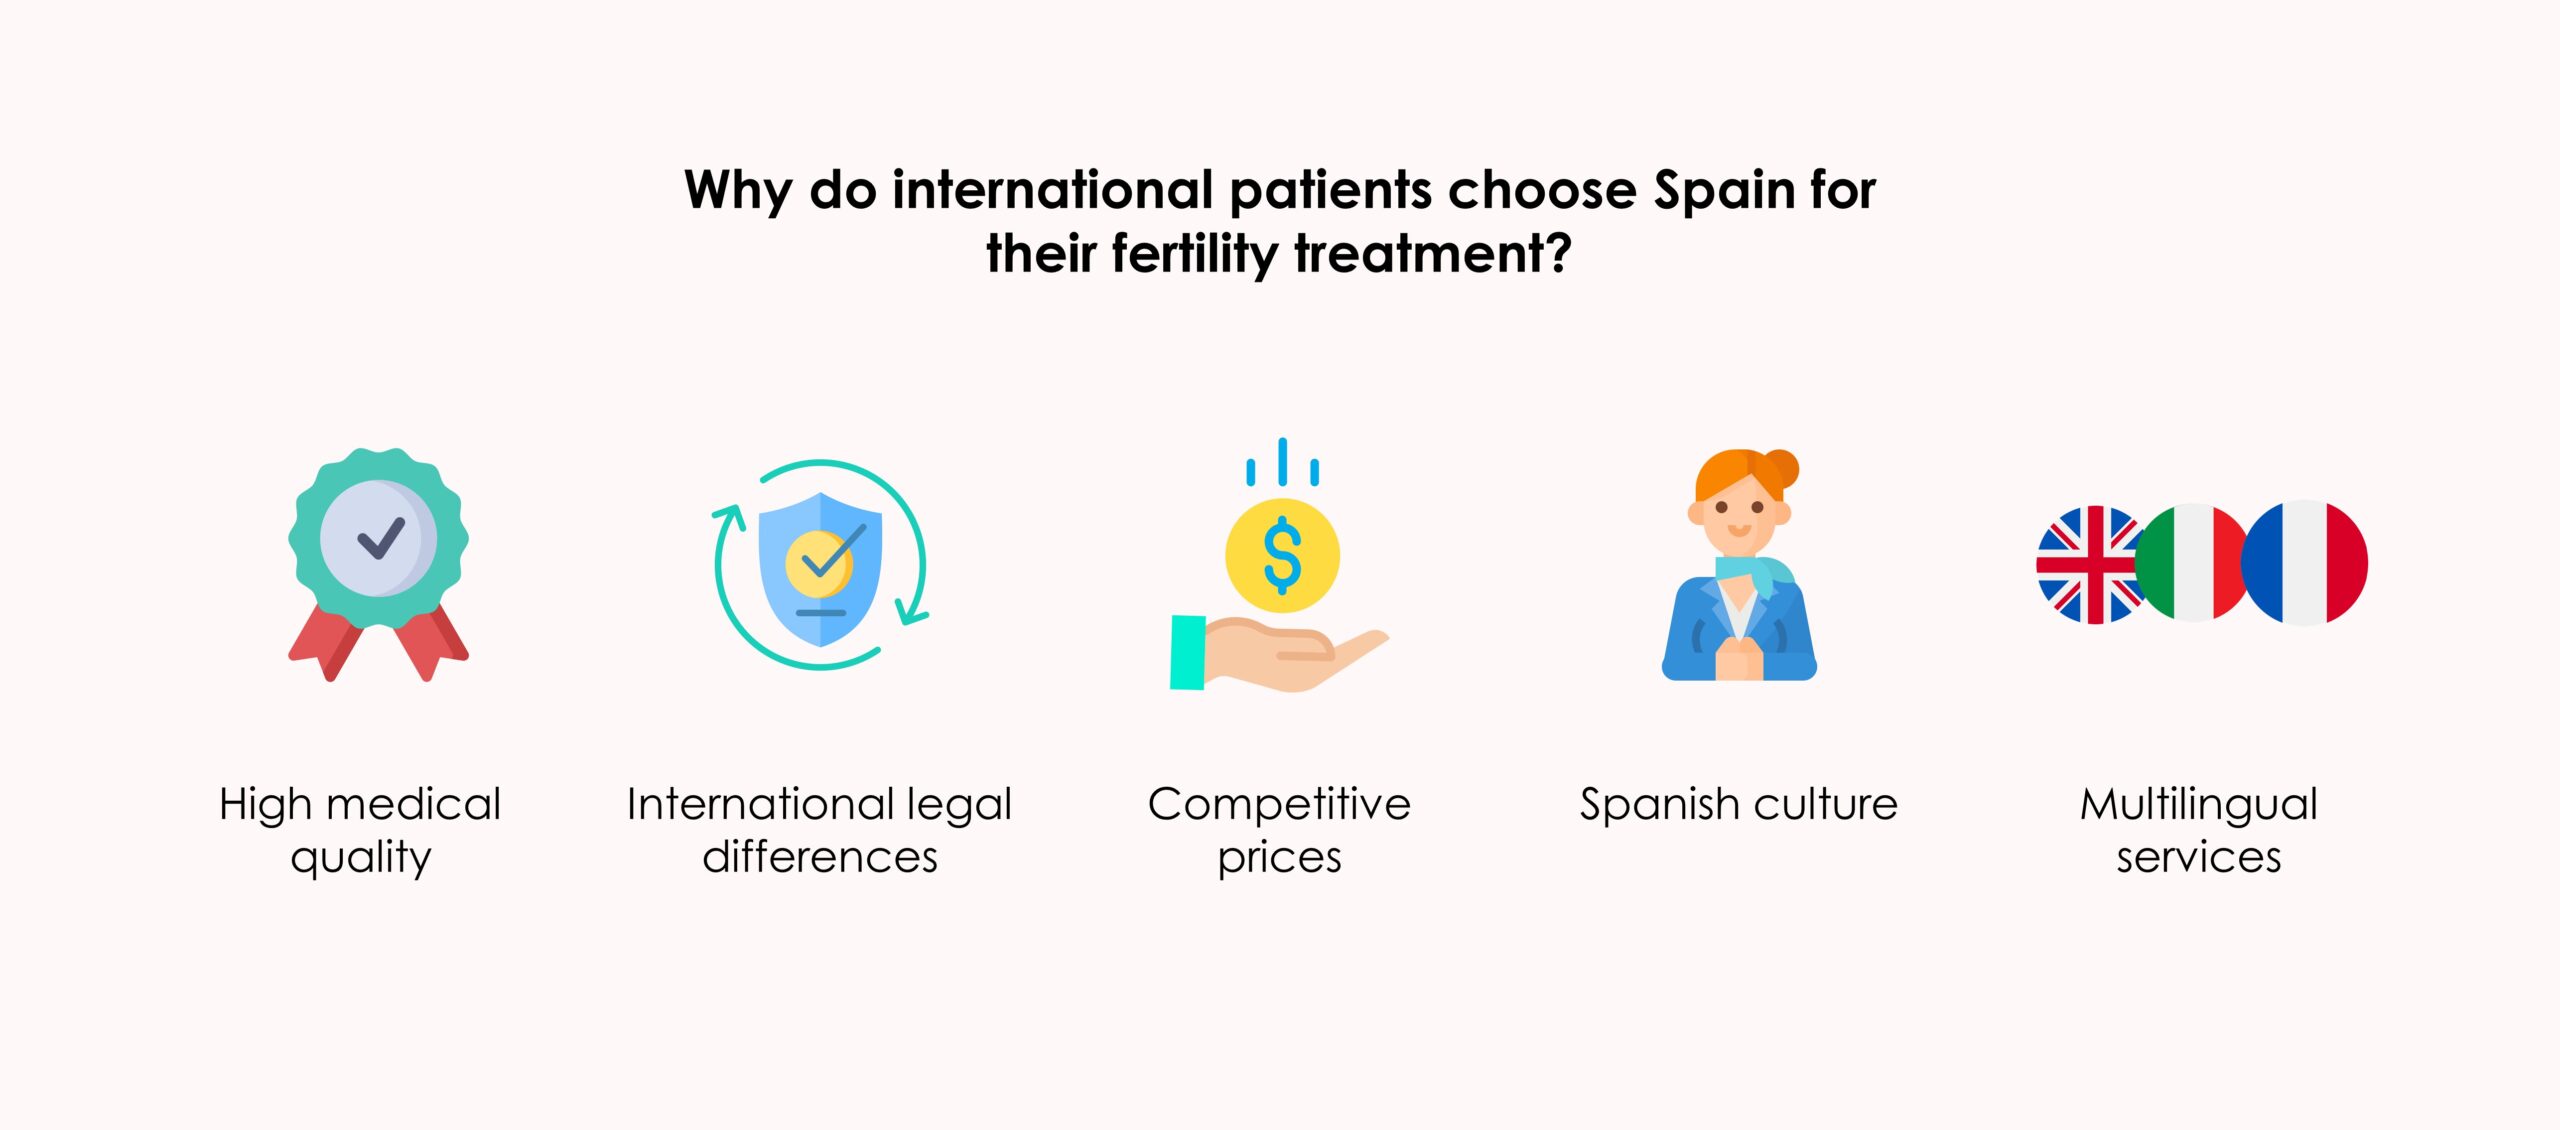 International patients travel to fertility clinics in Spain